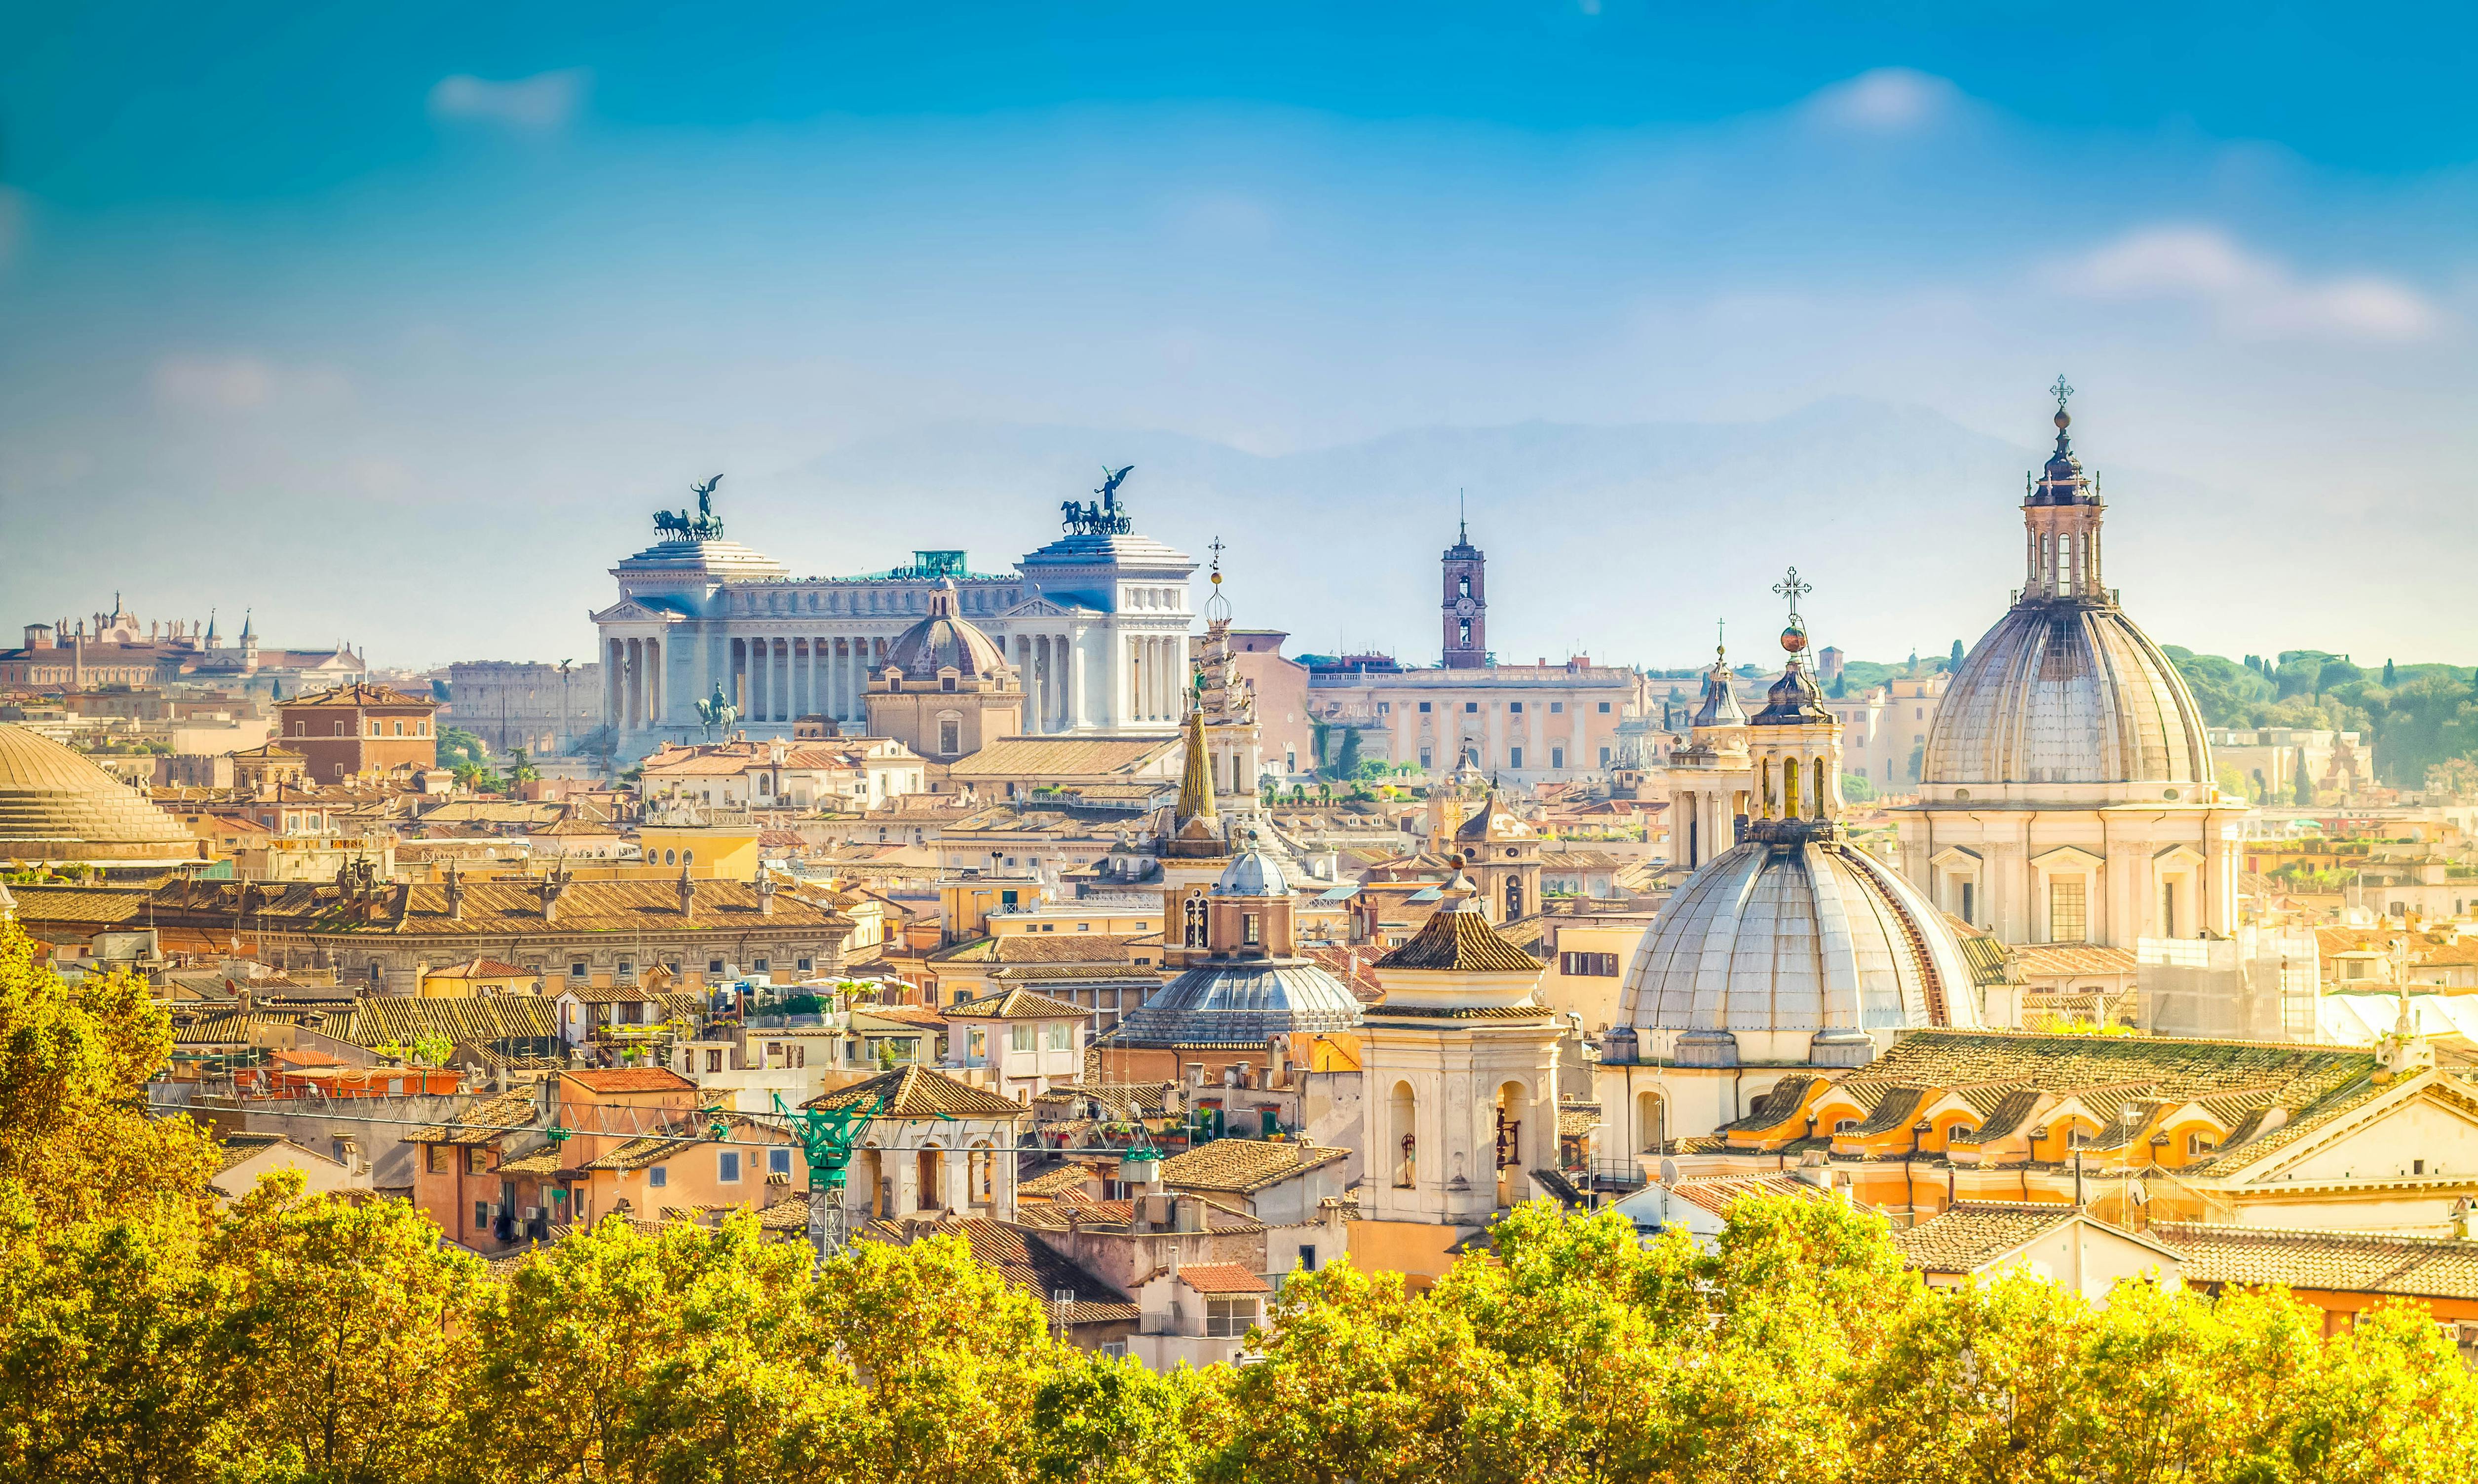 Escape Tour zelfgeleide, interactieve stadsuitdaging in Rome